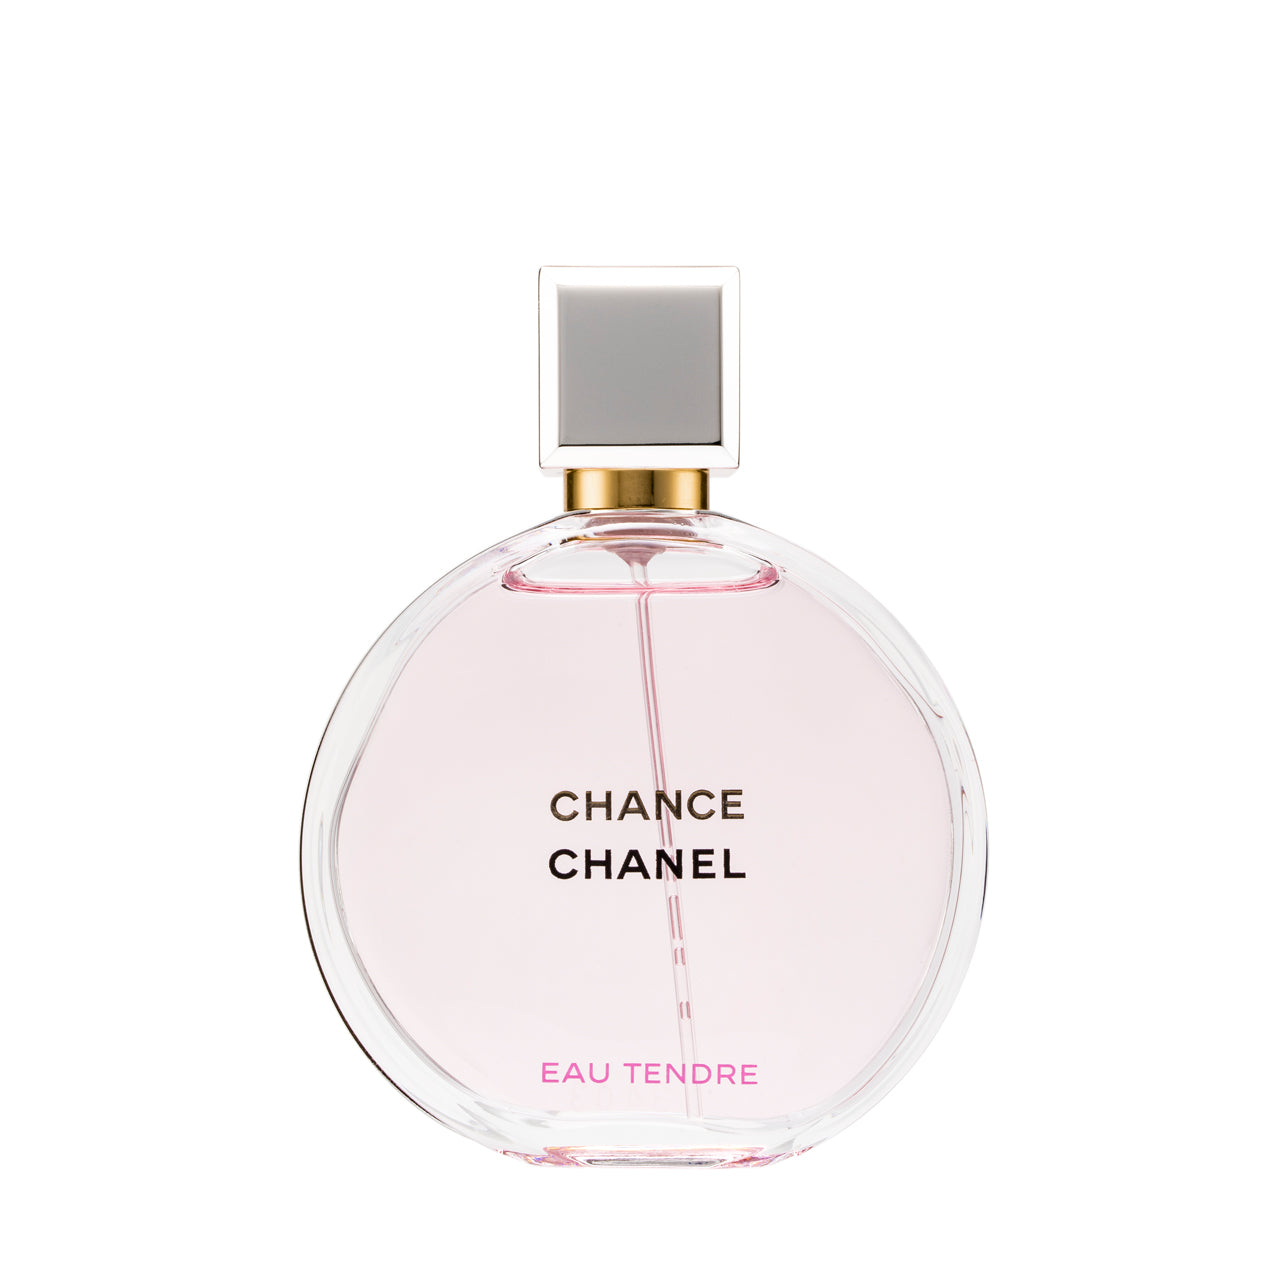 Chance Eau Tendre EDP By Chanel 2ml Perfume Vial Sample Spray